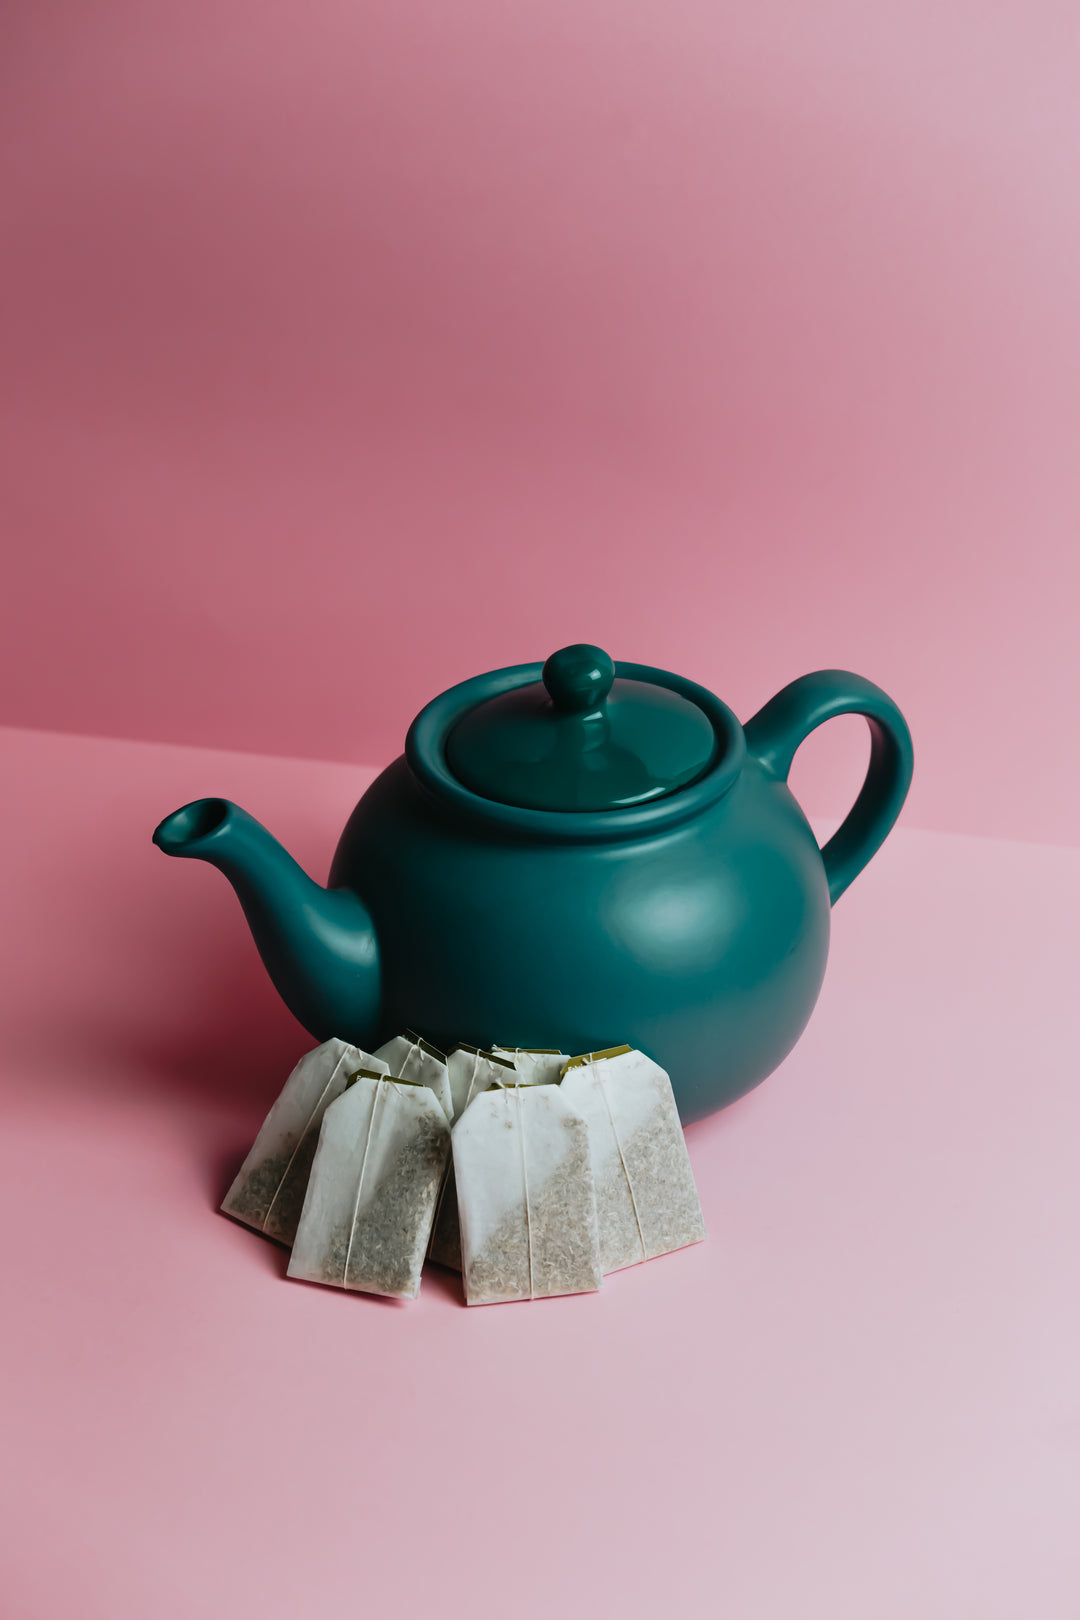 An herbal tea pot